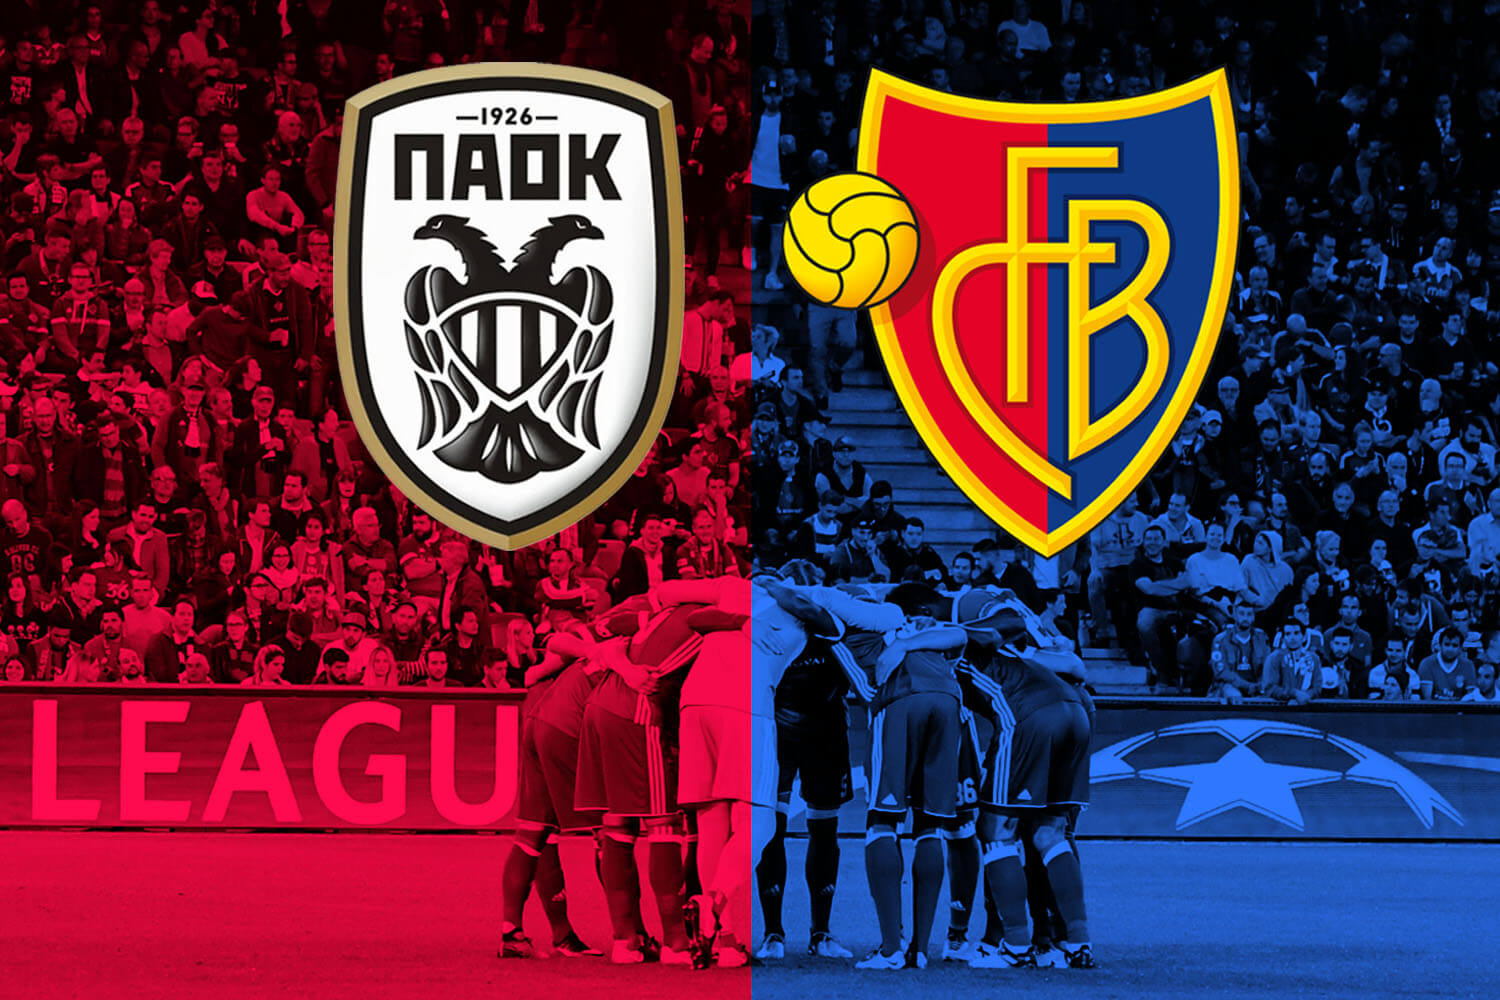 PAOK vs FC Basel - Futebol com Valor